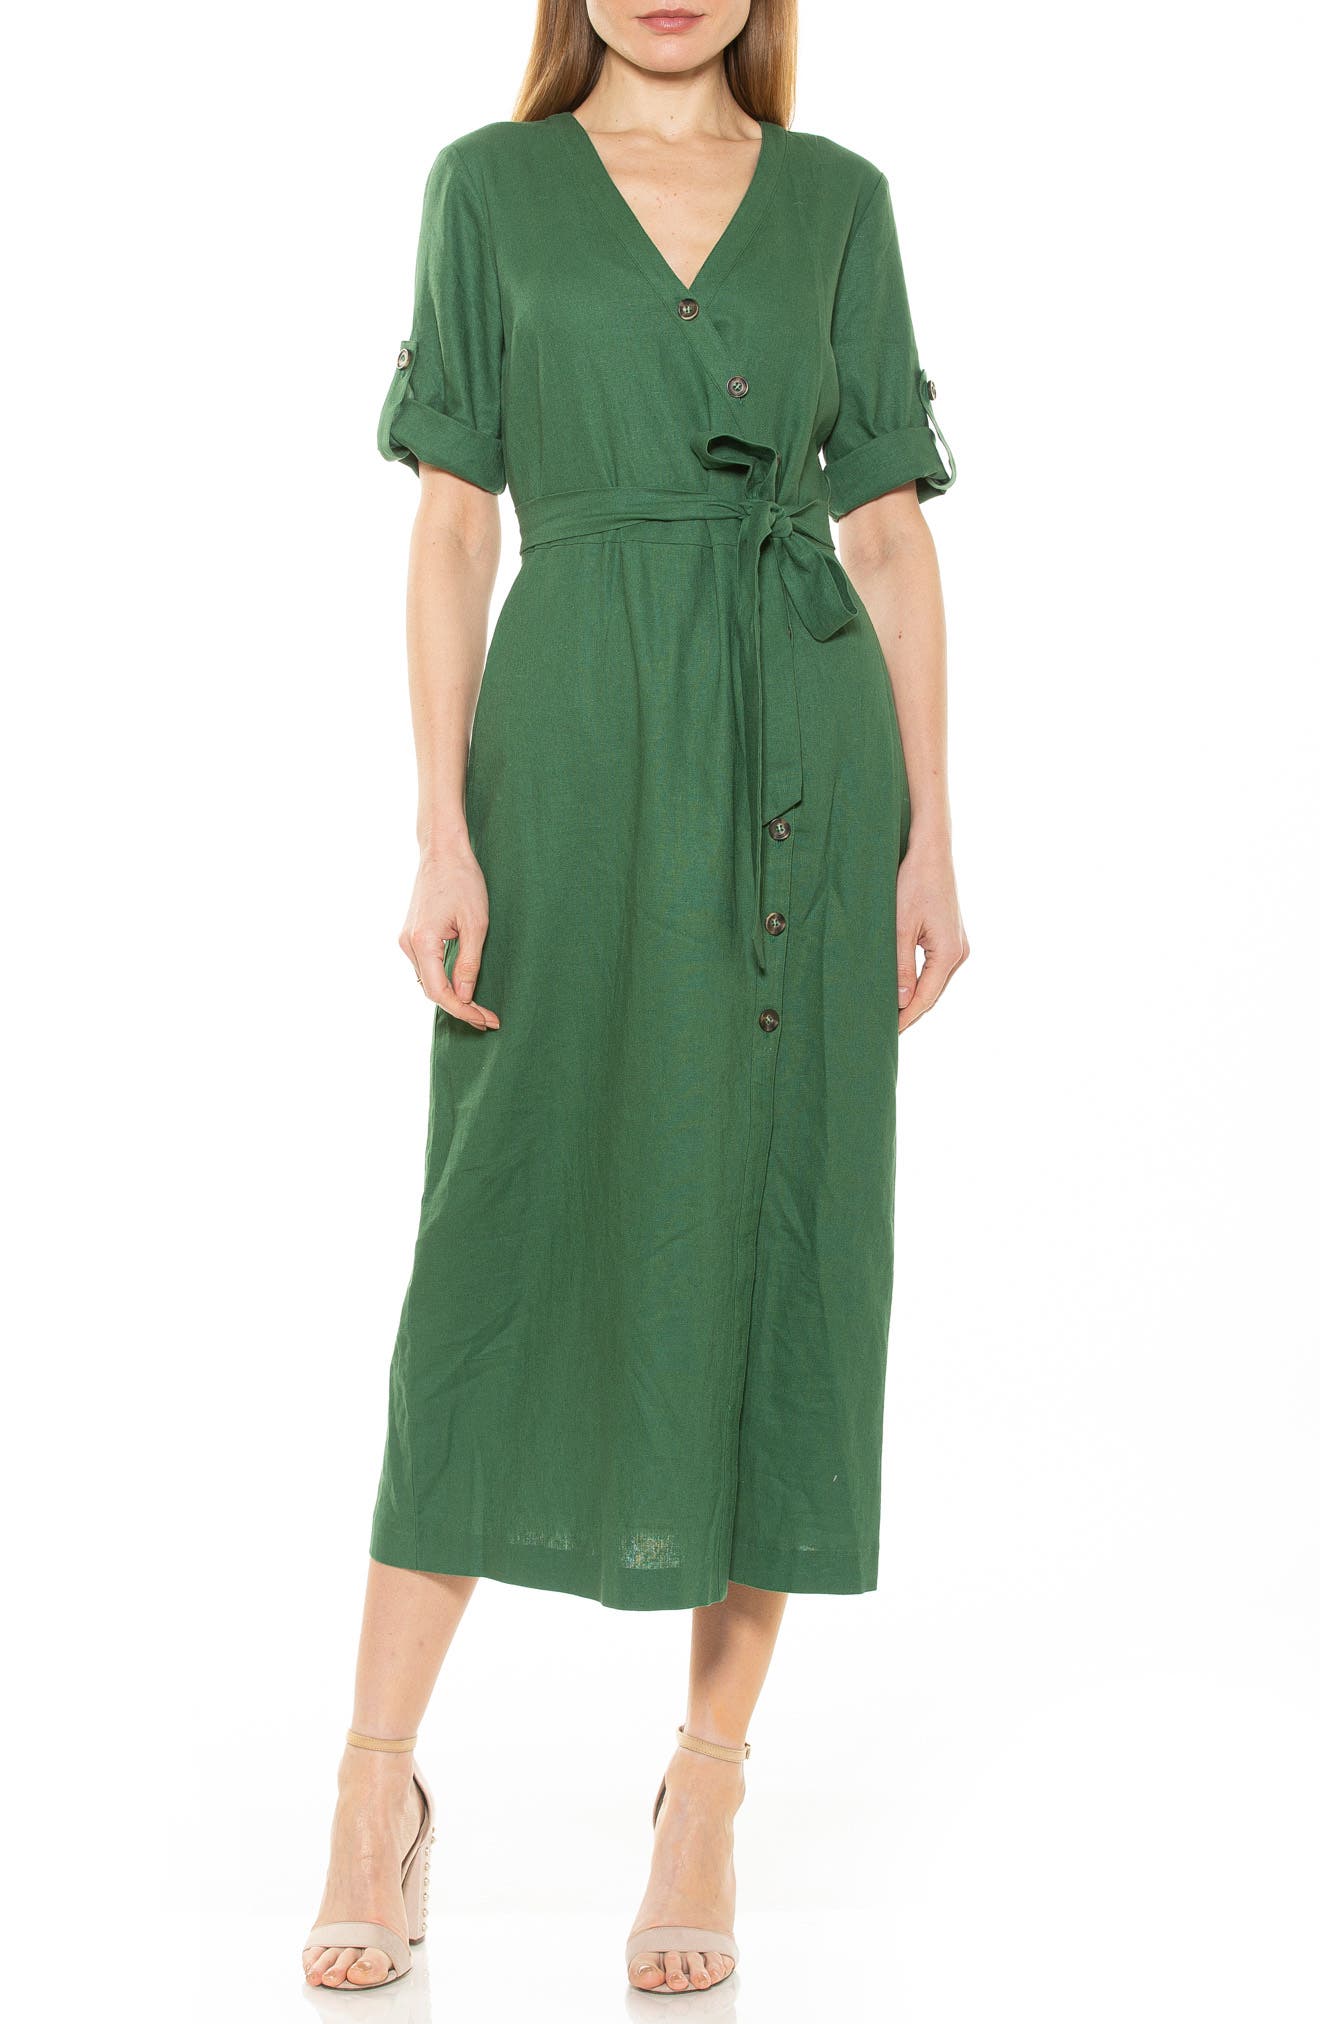 Alexia Admor Collette Asymmetrical Button Down Short Sleeve Dress In Safari Green